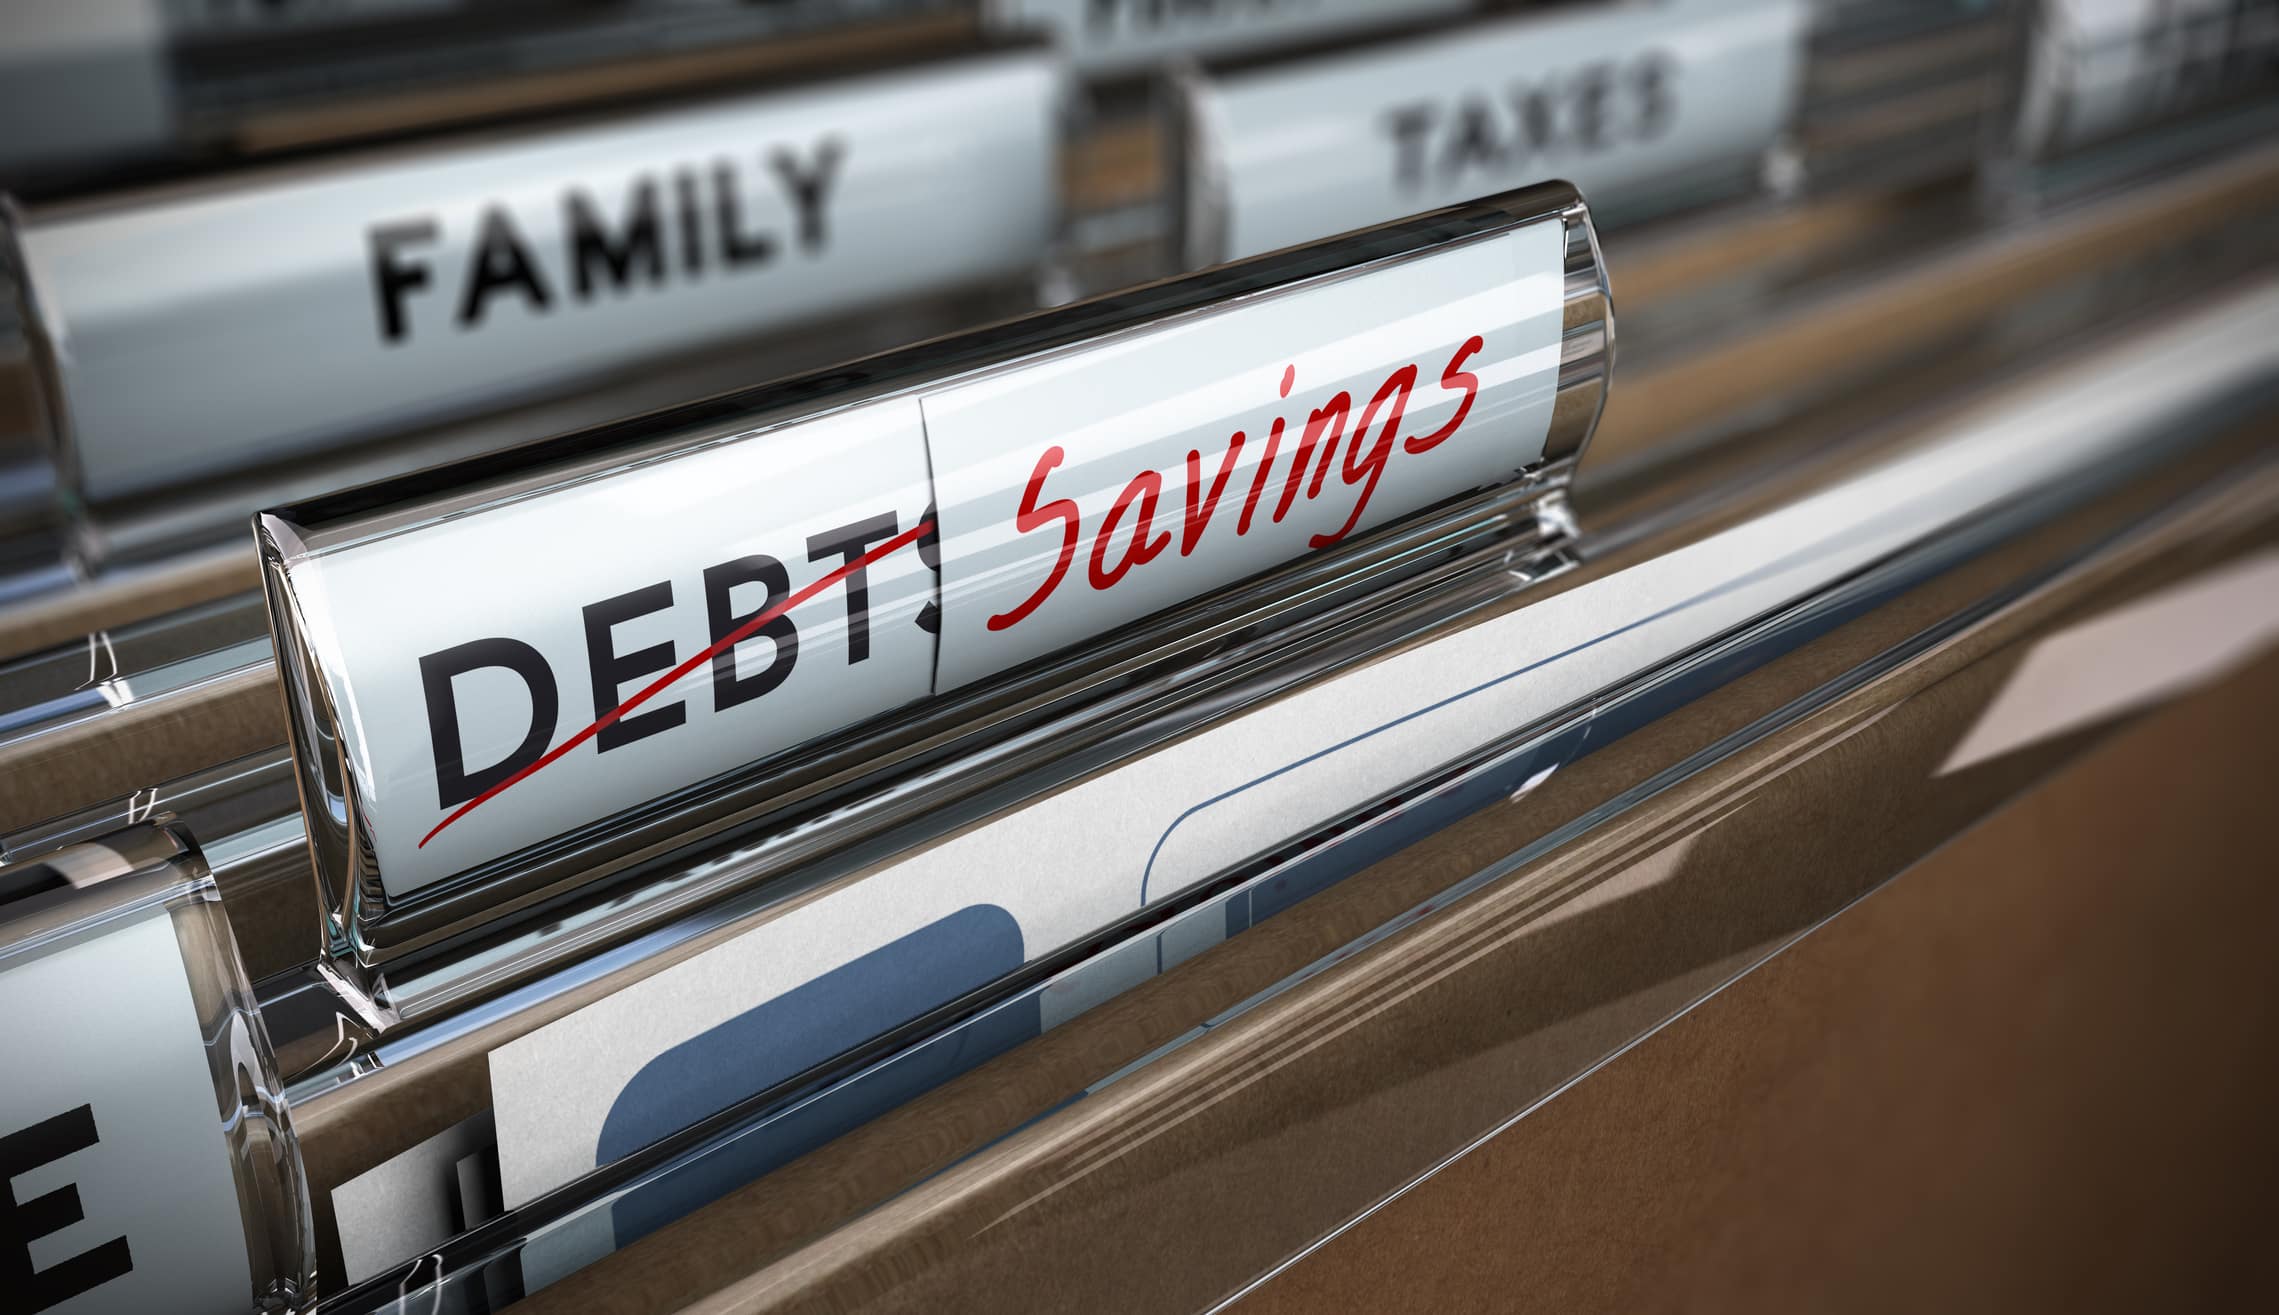 debt repayment options. File tab with focus on savings. Conceptual image for illustration of debt vs savings